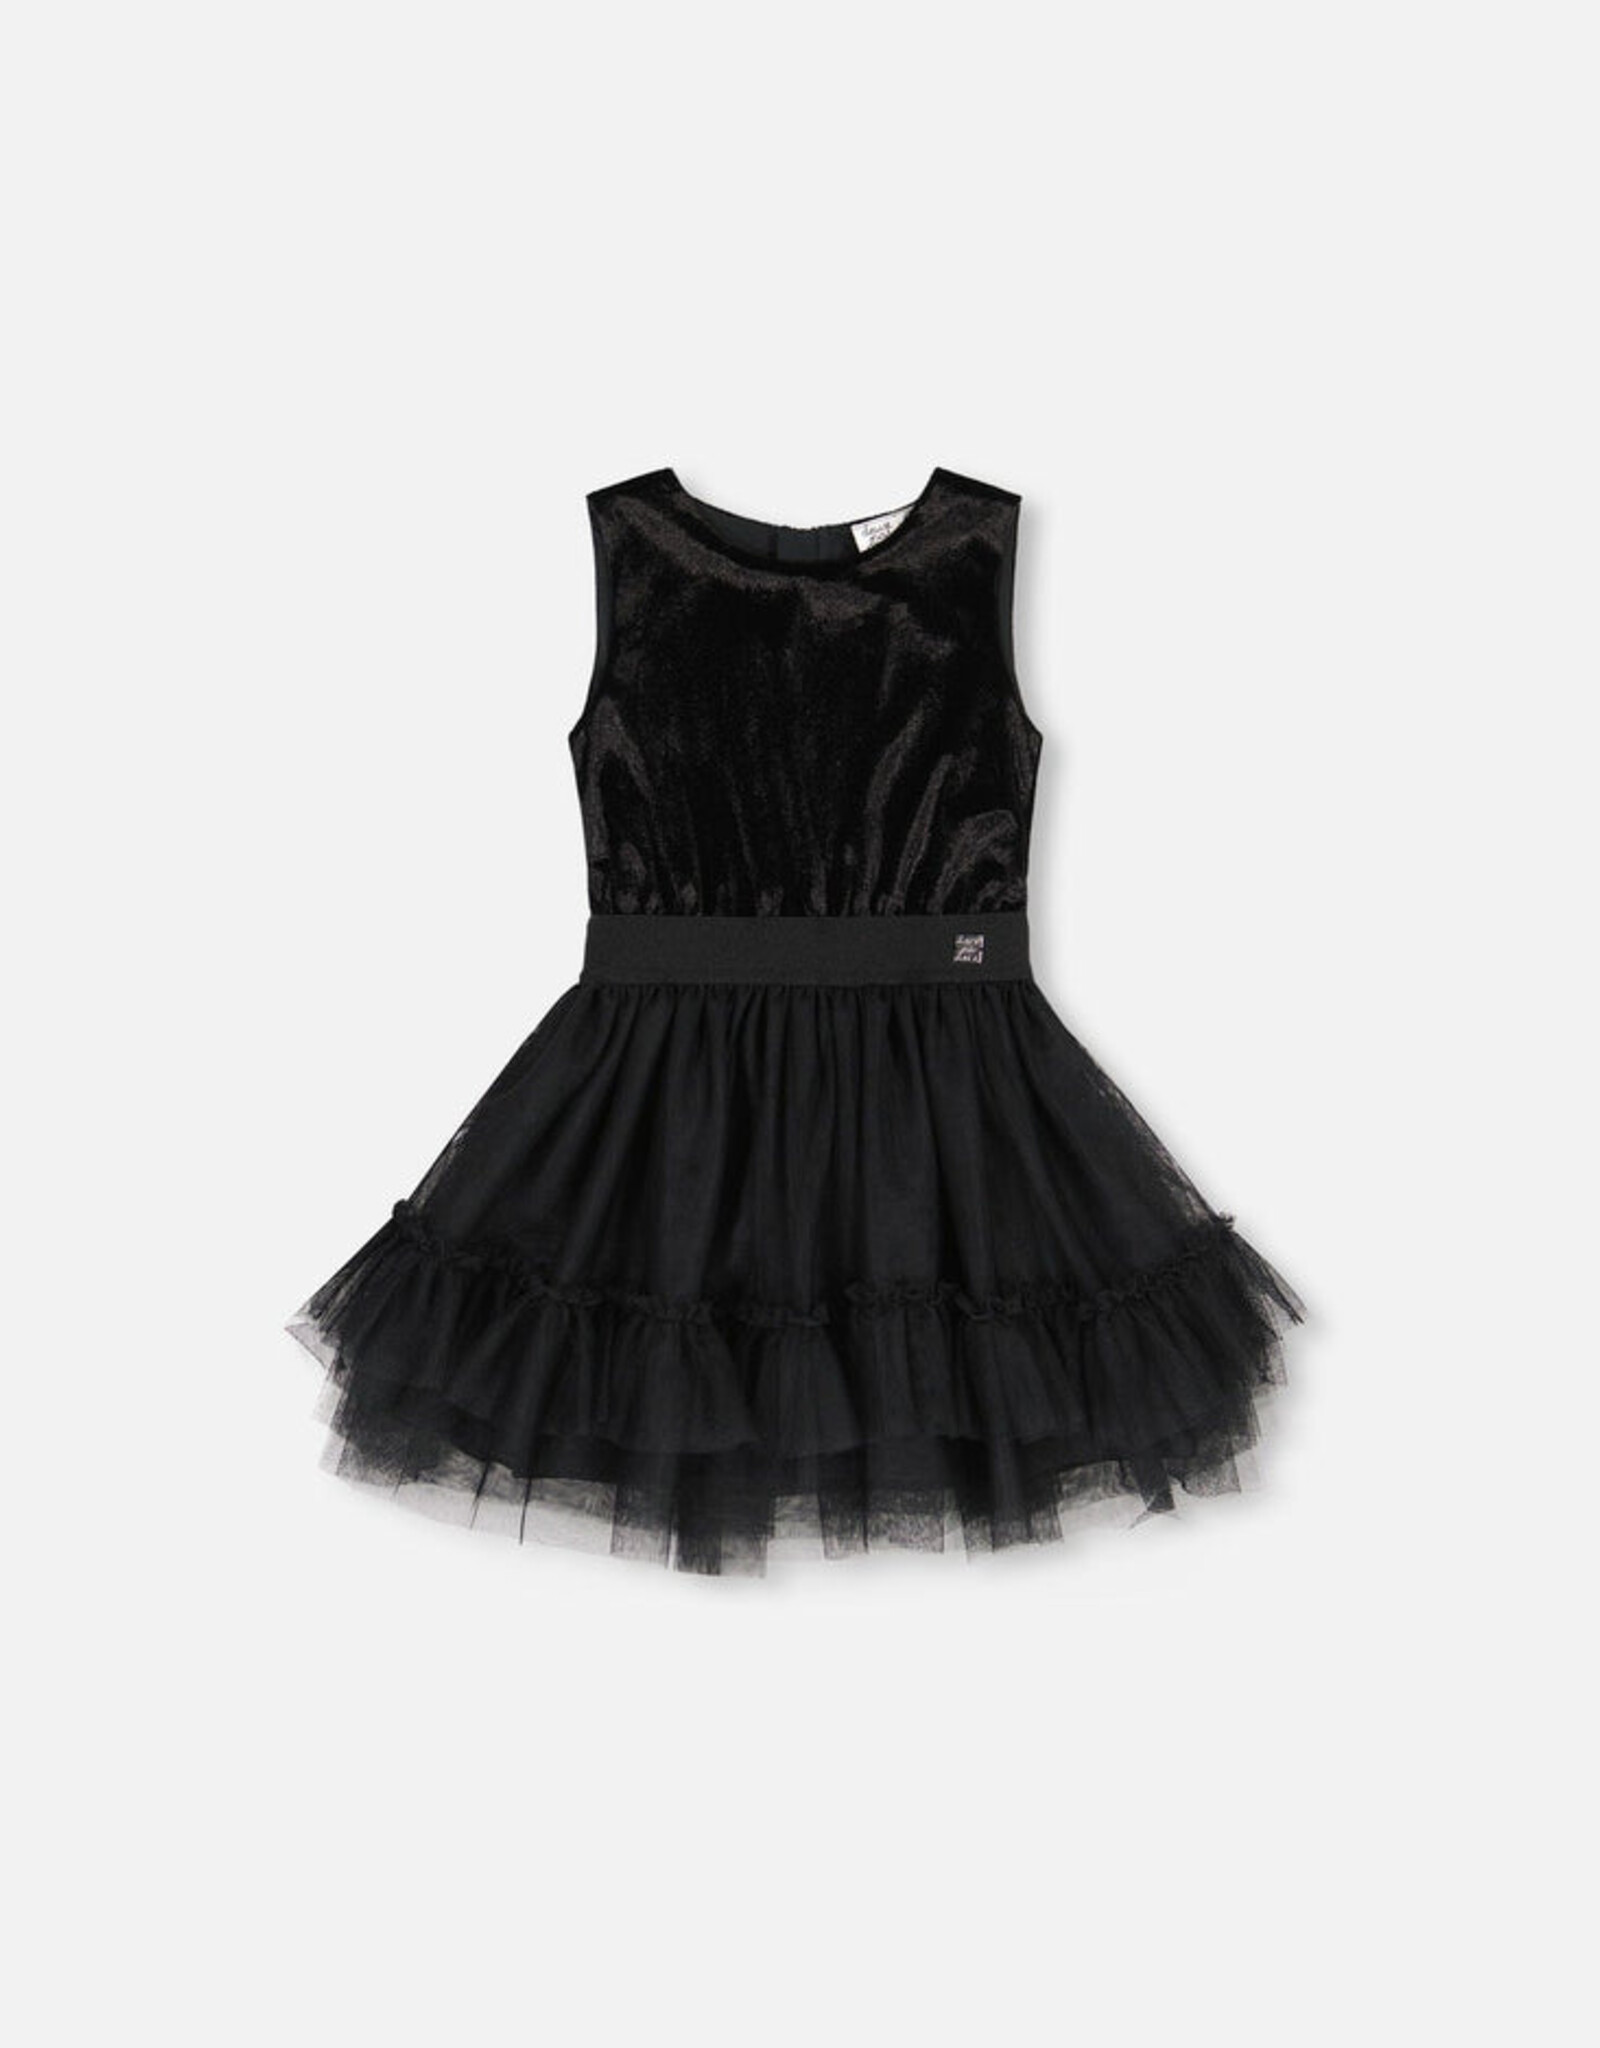 DeuxParDeux FA23 G Sleeveless Dress w/Tulle Skirt